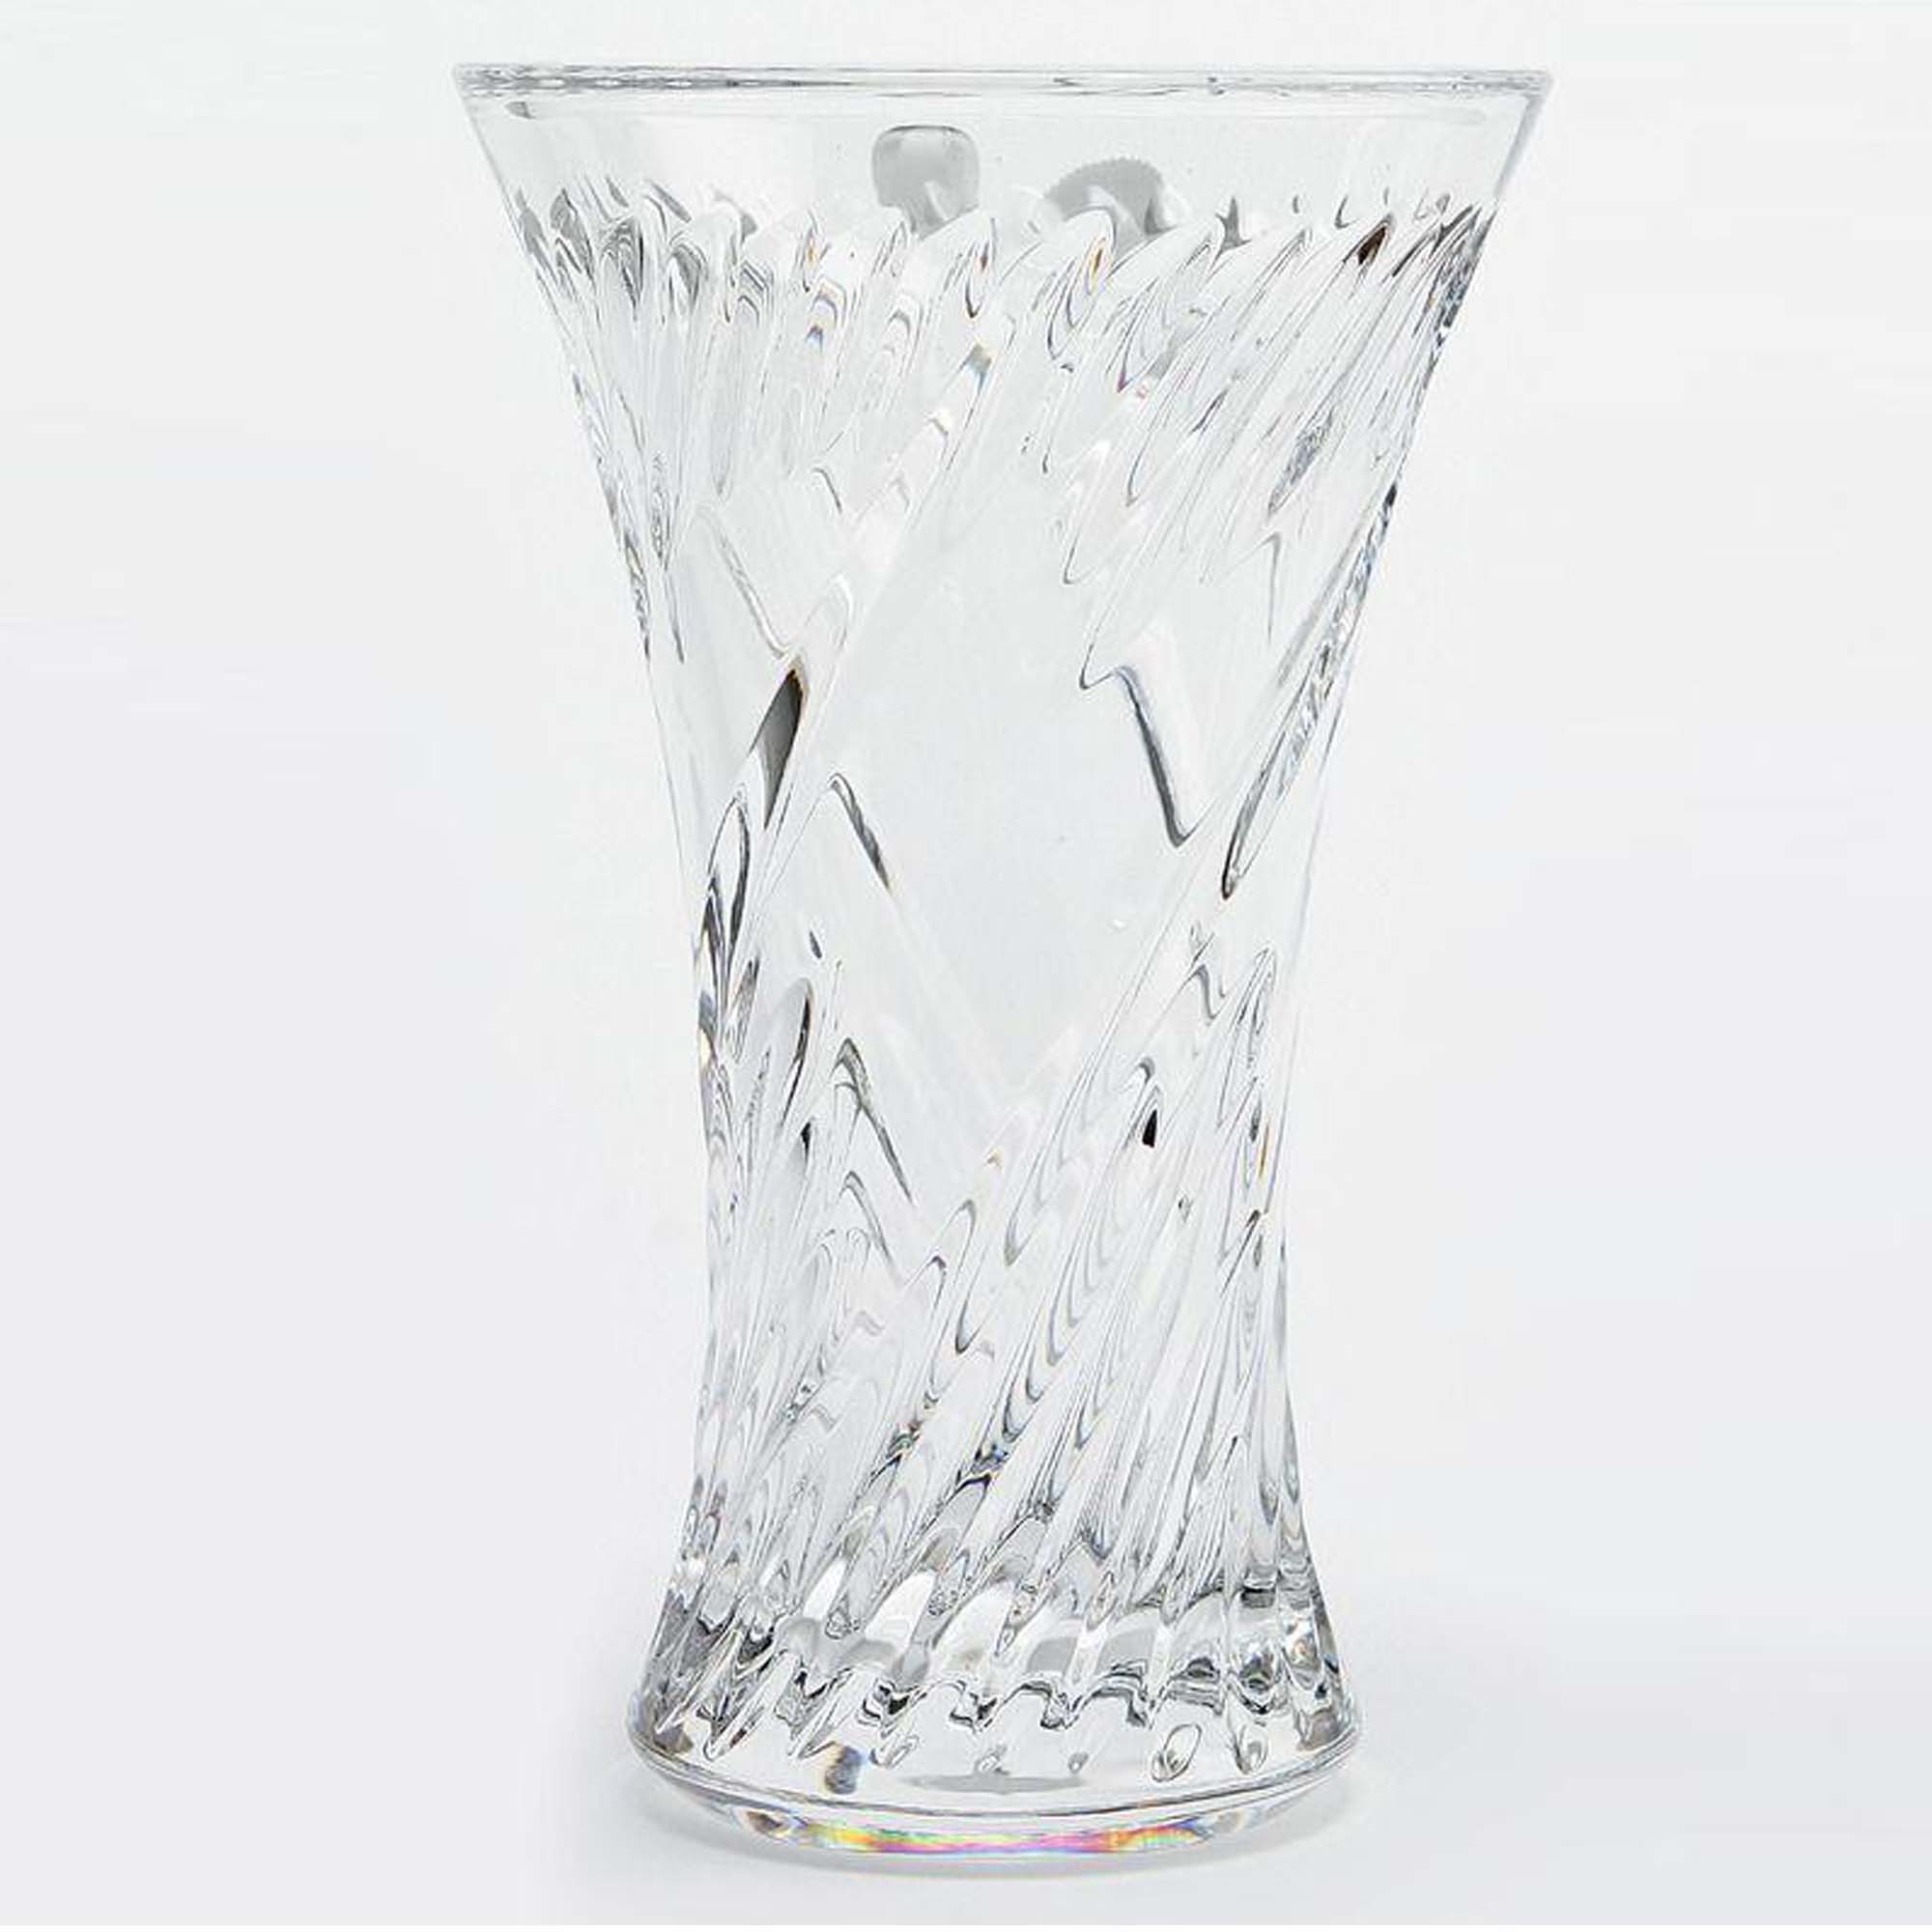 Ваза Cryastal Bohemia Giftware (490/80026/0/00360/195-109) ваза для фруктов pinwheel 11 8 см 930 66100 0 26080 118 109 crystal bohemia